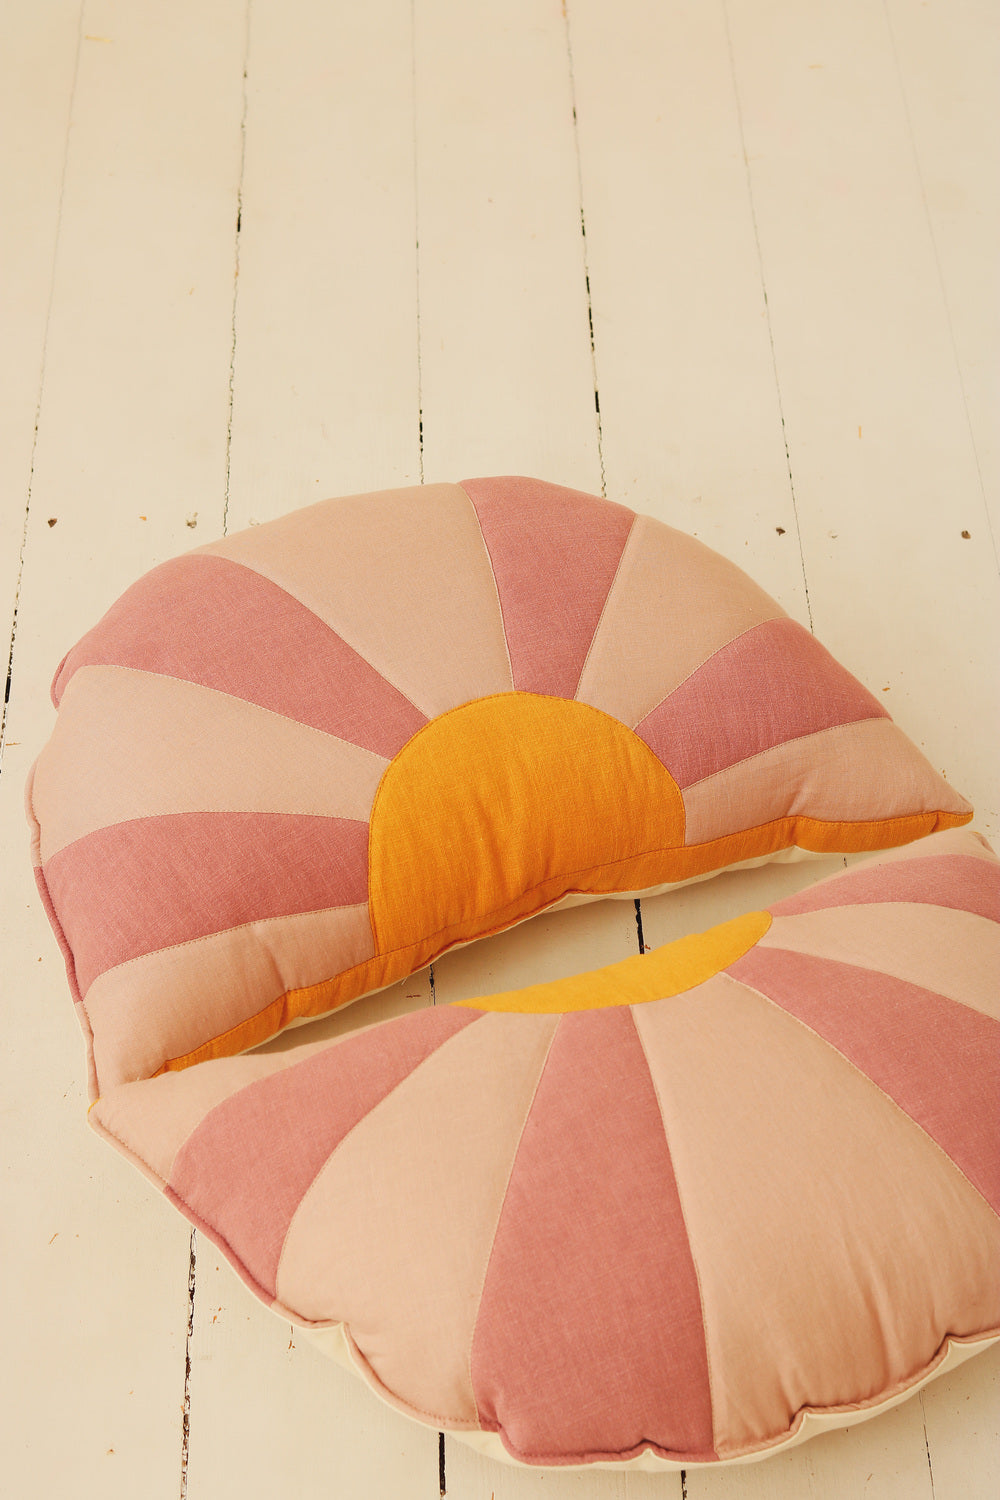 “Lazy Santa Cruz” Sun Pillow by Moi Mili